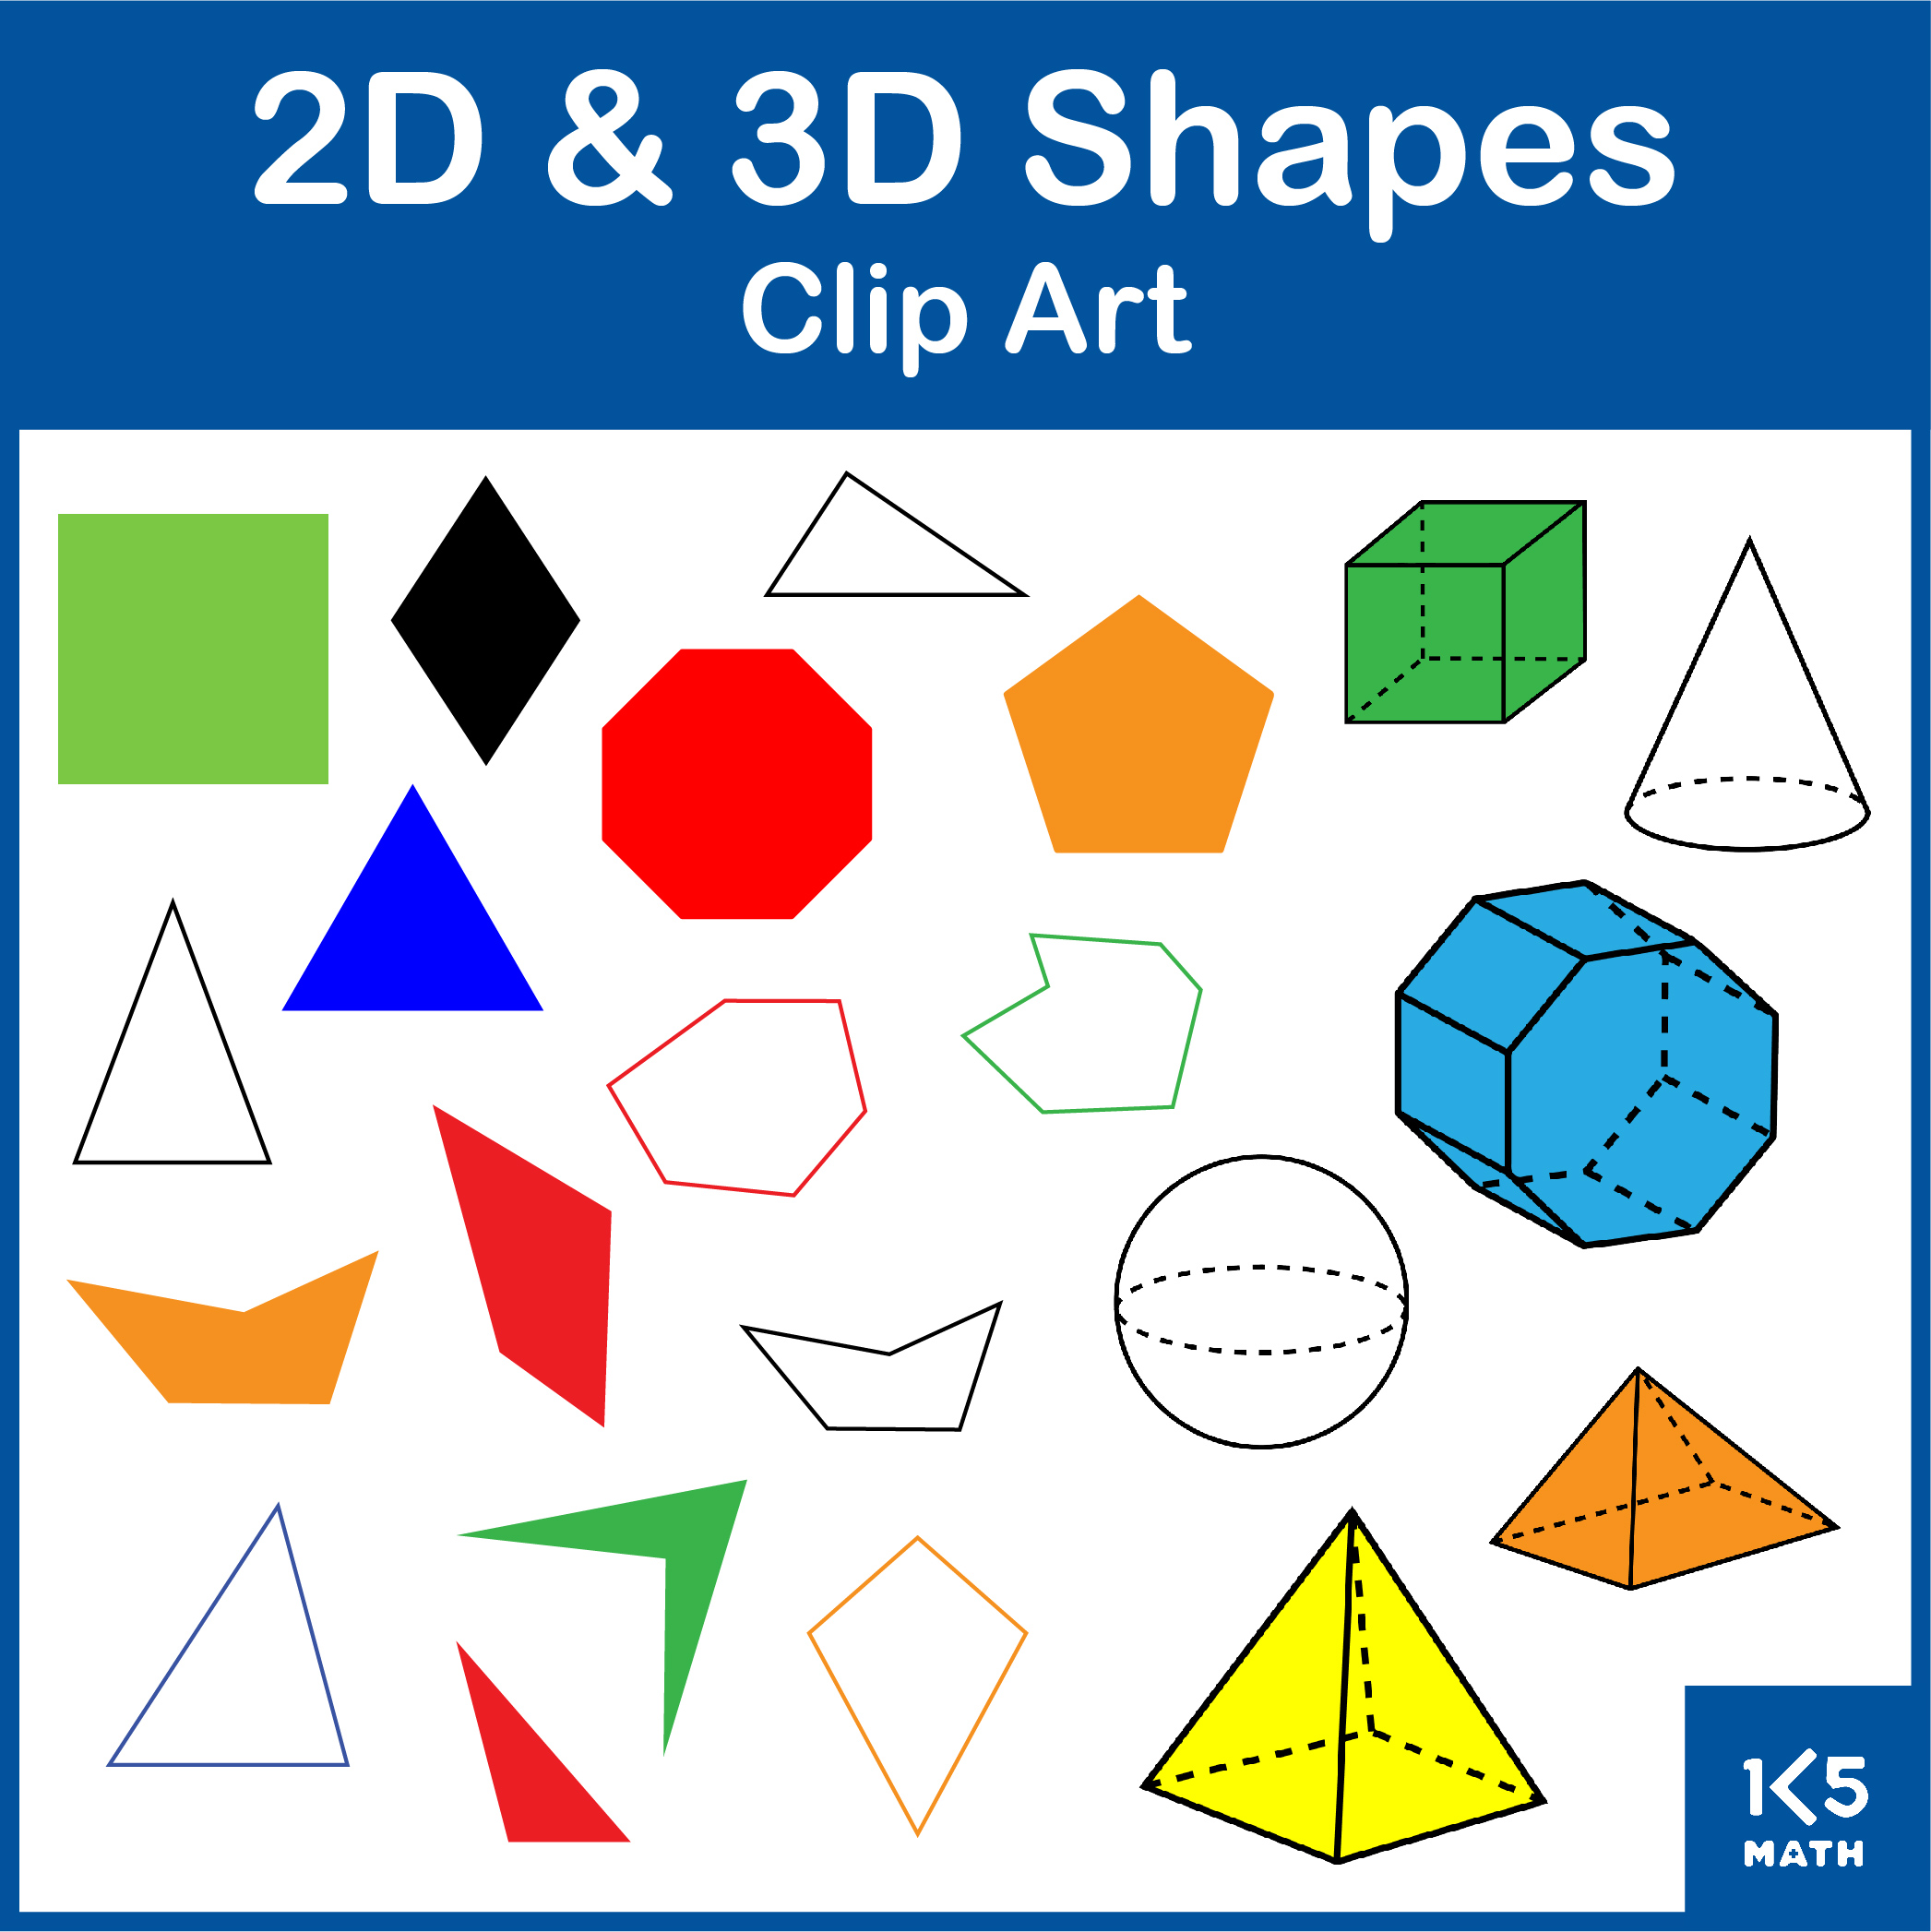 geometric 3d forms clipart